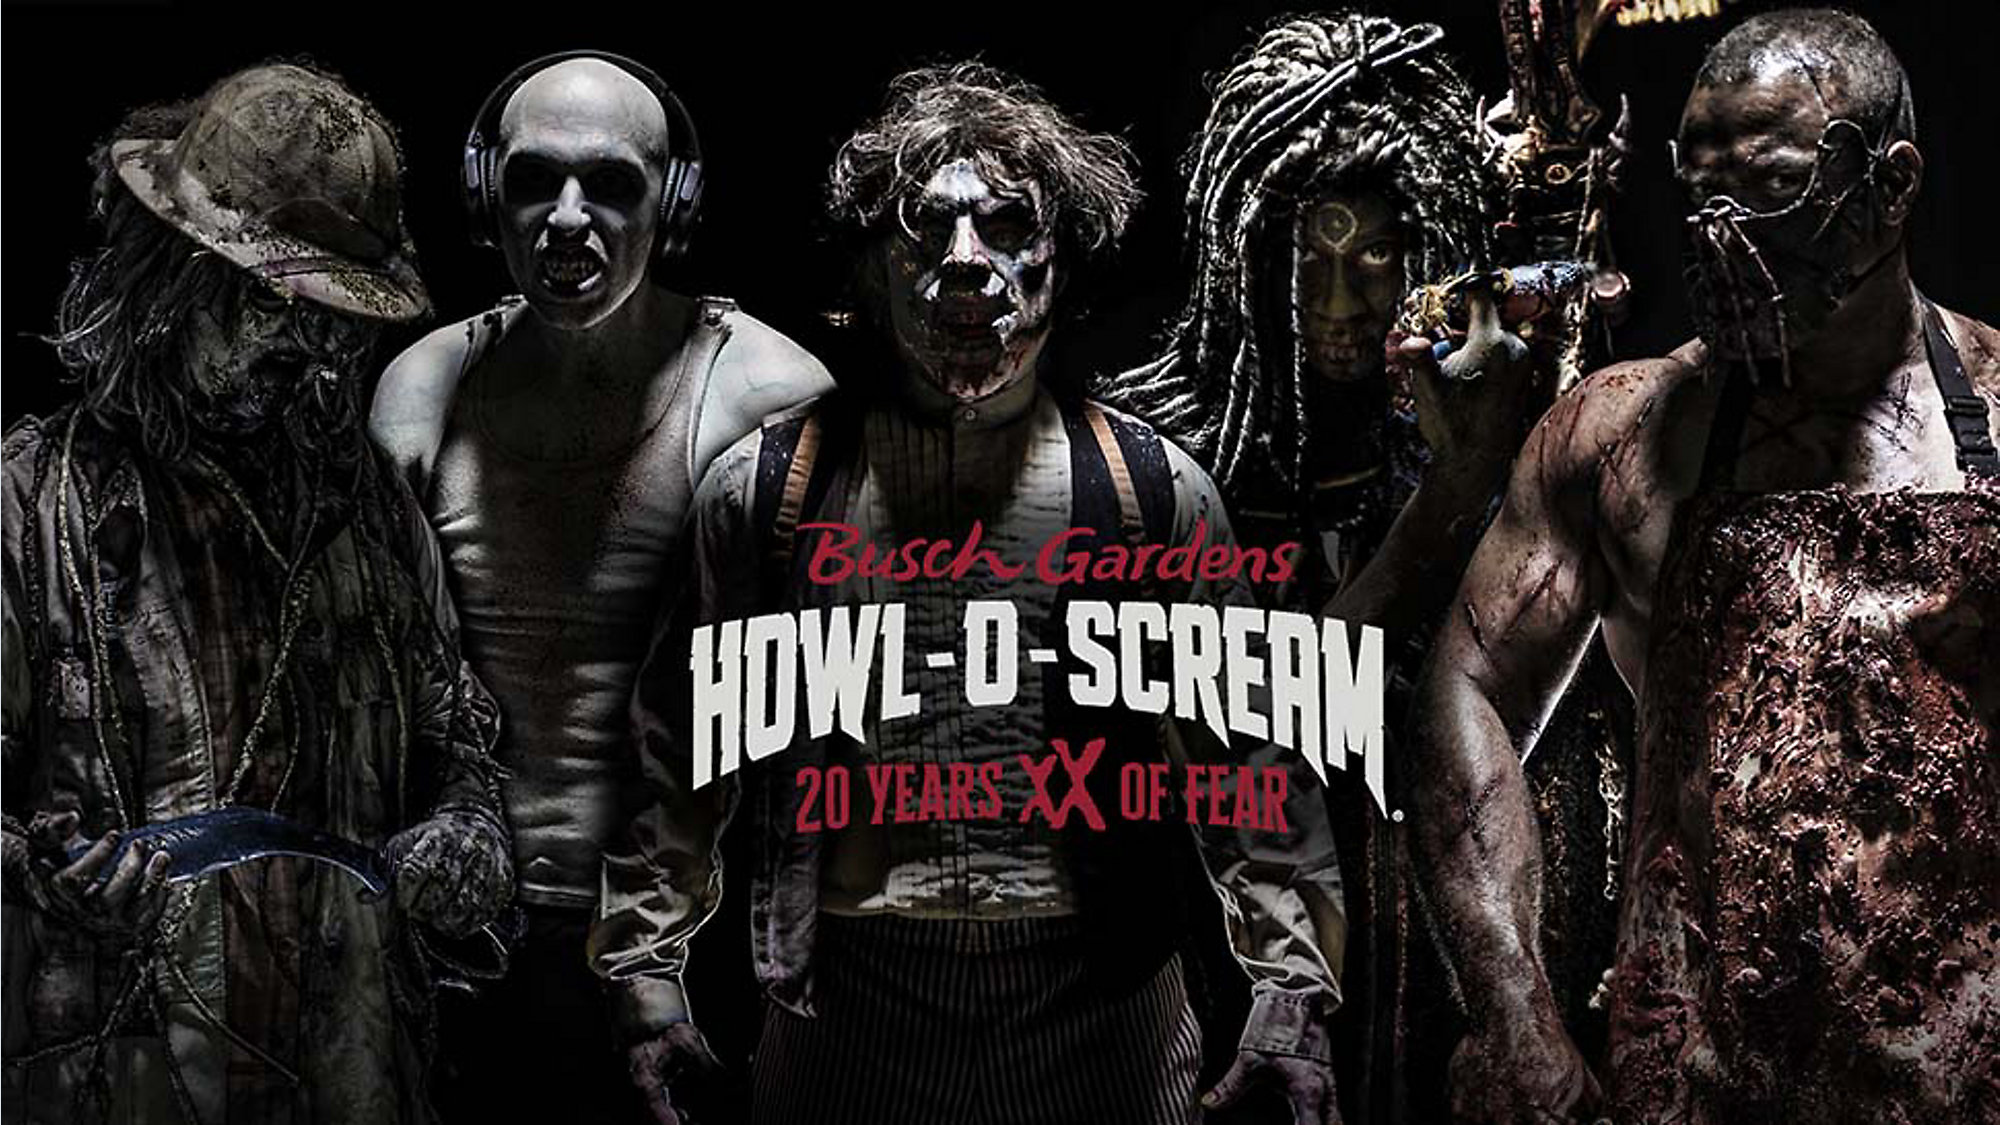 Busch Gardens Offering Ticket Deal For Howl O Scream